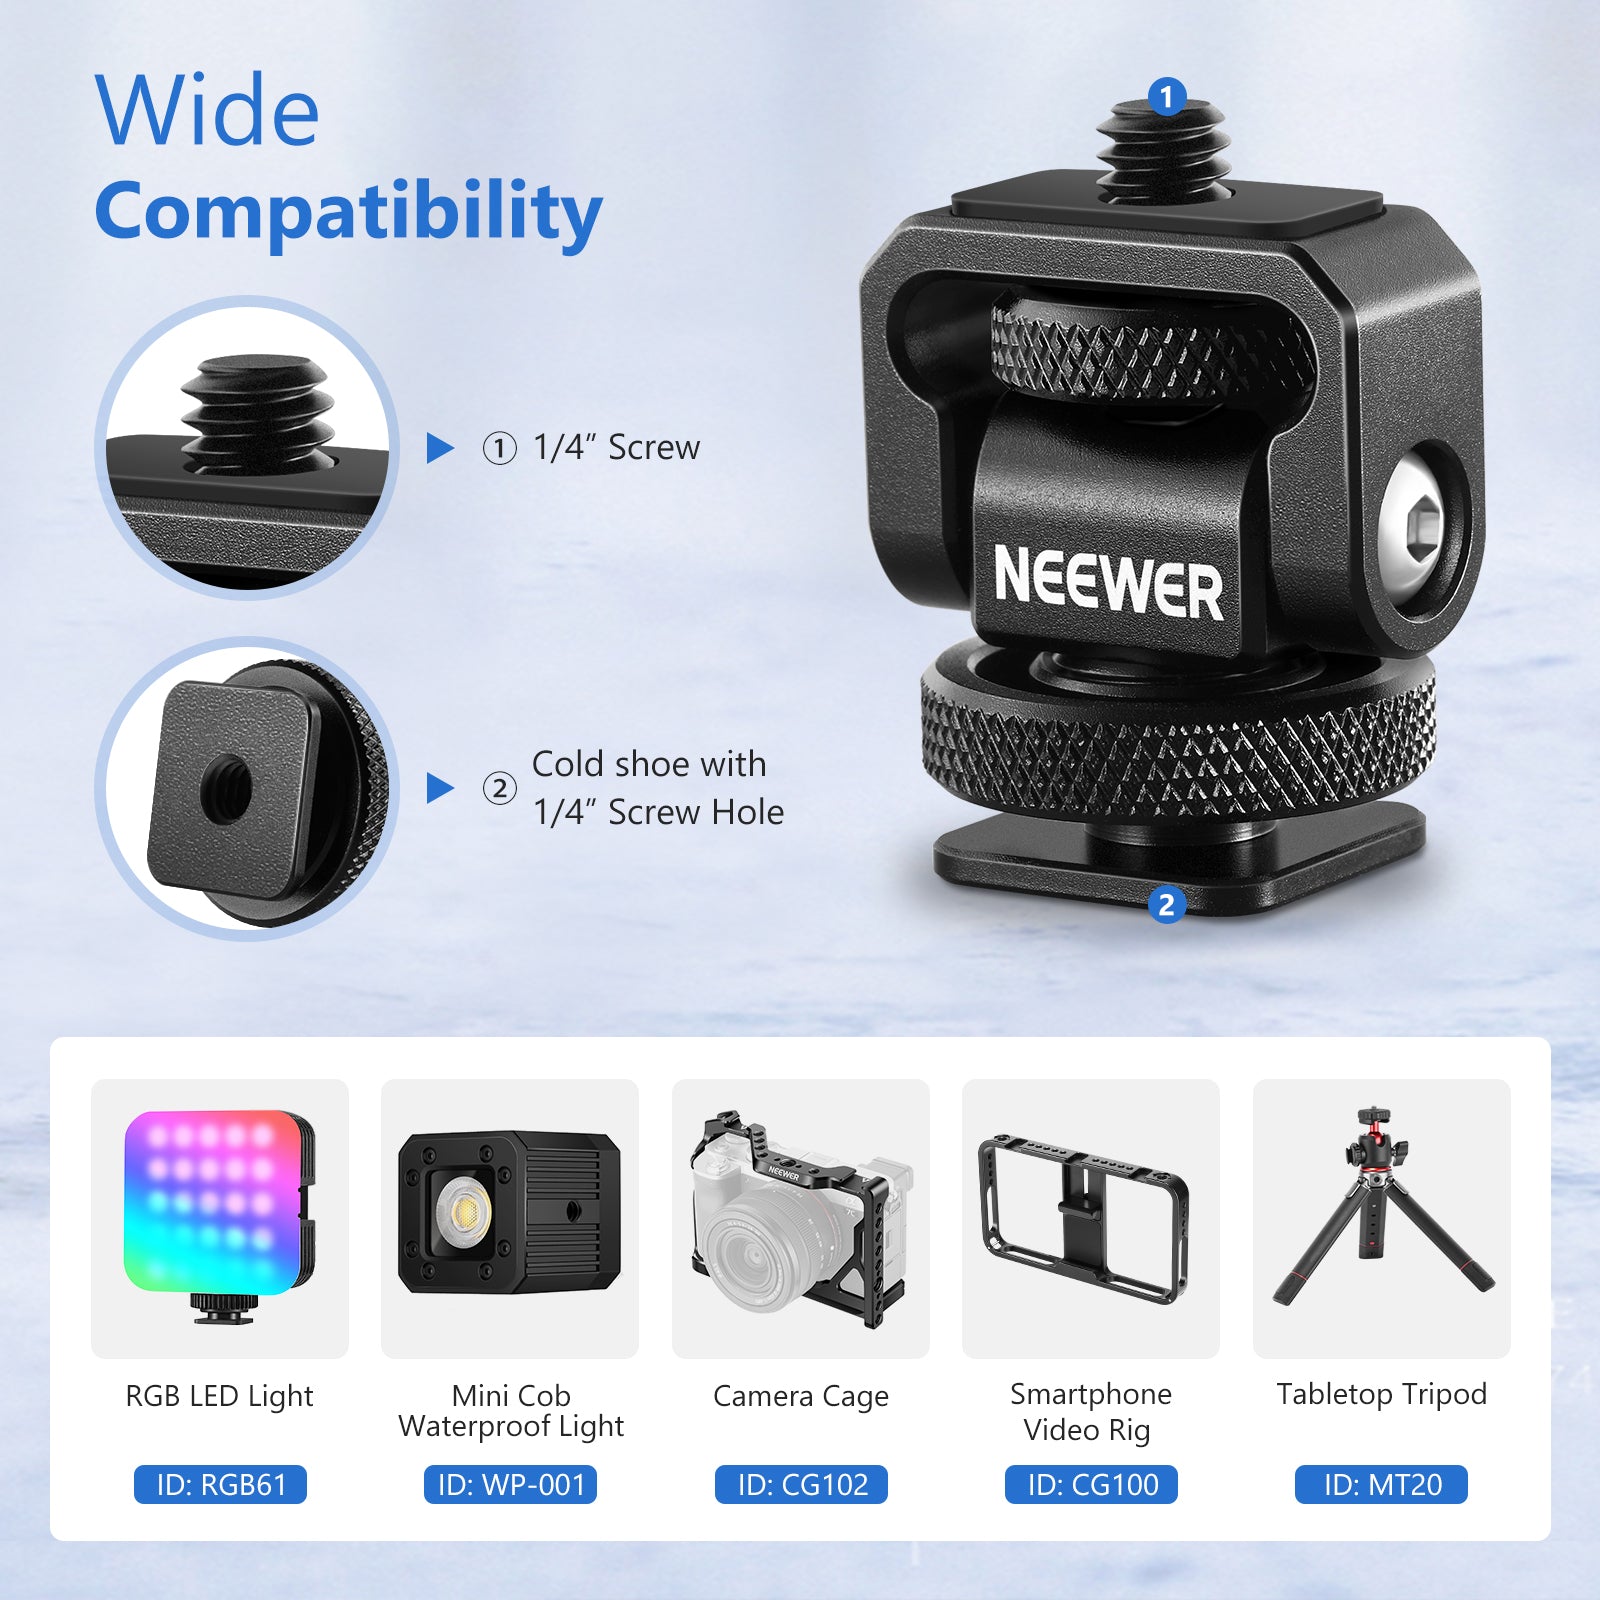 NEEWER ST37 1/4” Mini Ball Head Camera Cold Shoe Mount Adapter